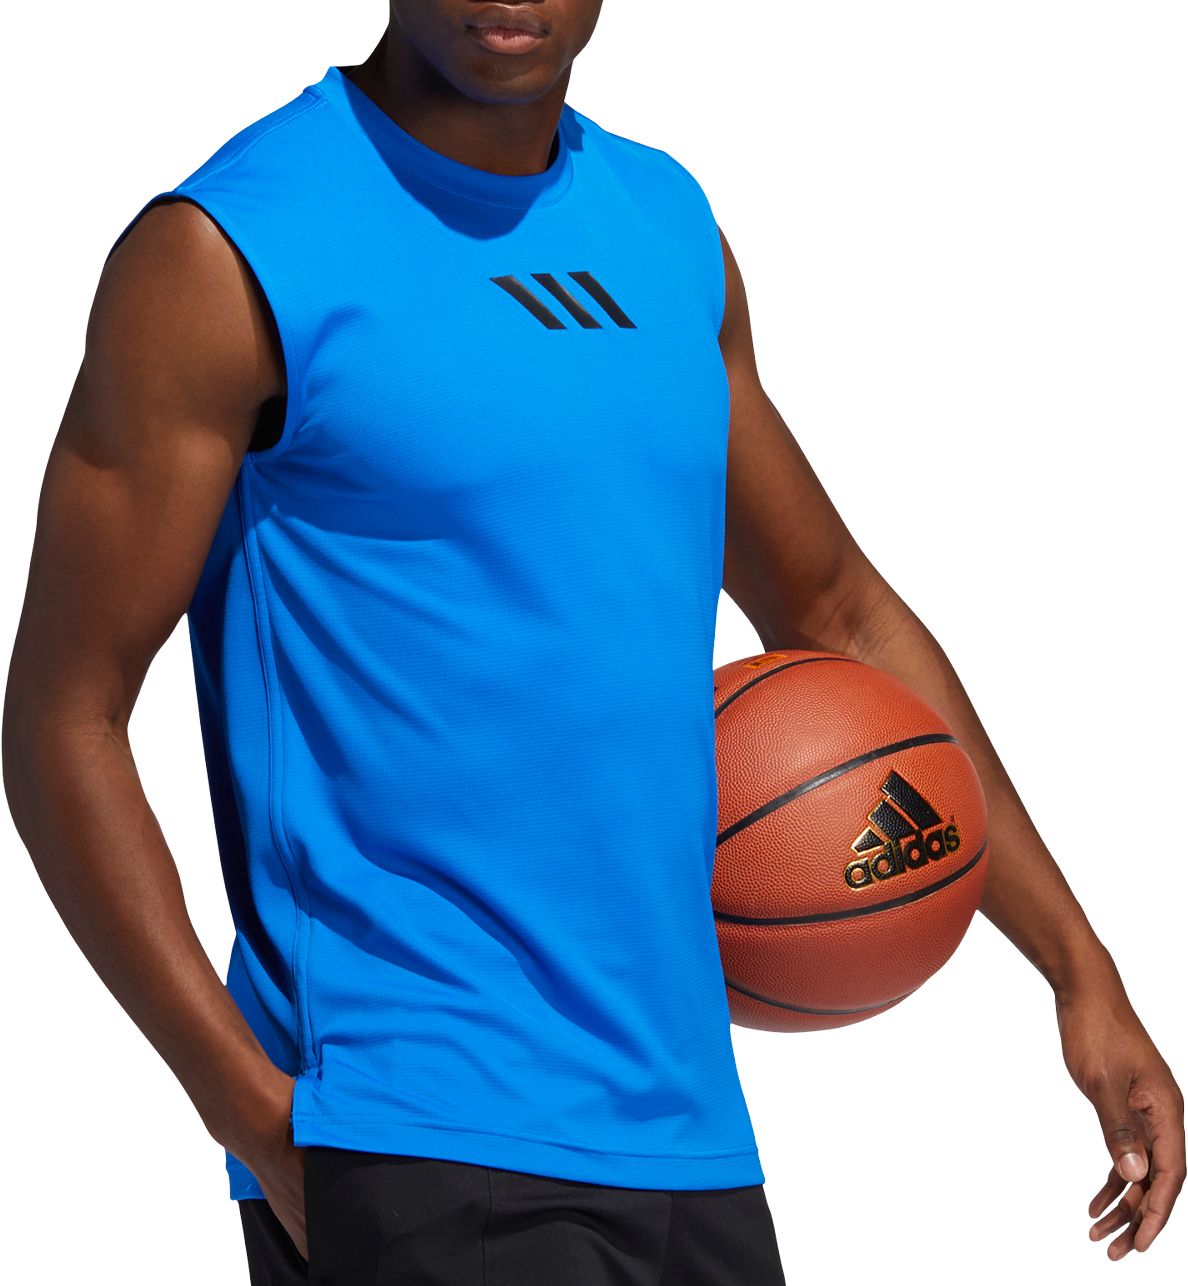 adidas men's pro madness basketball tank top